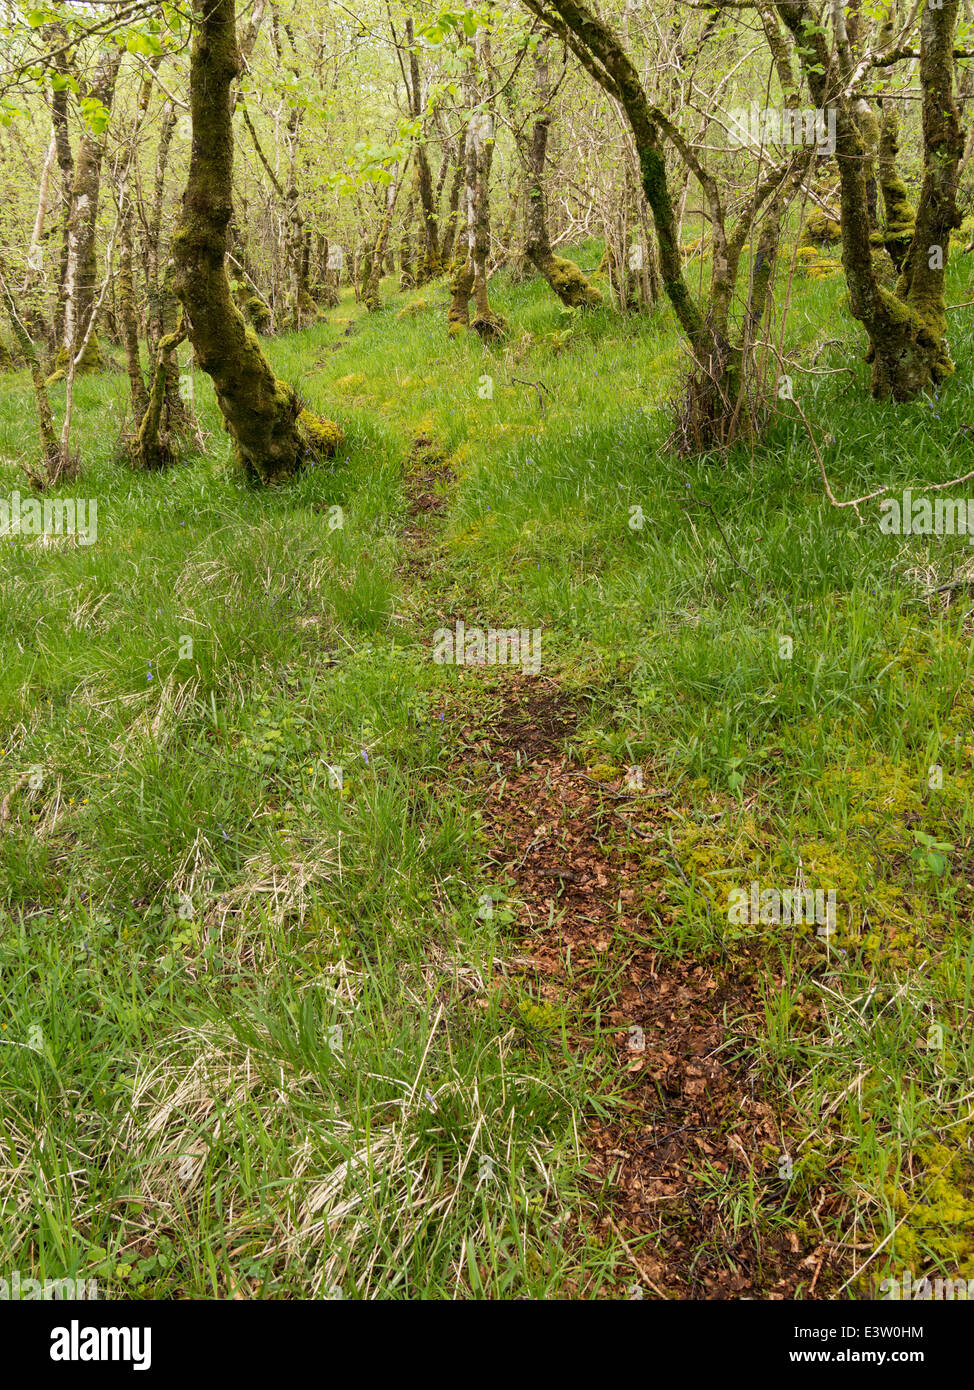 Feint woodland path through green grass and old moss covered trees, near Drinan, Isle of Skye, Scotland, UK Stock Photo